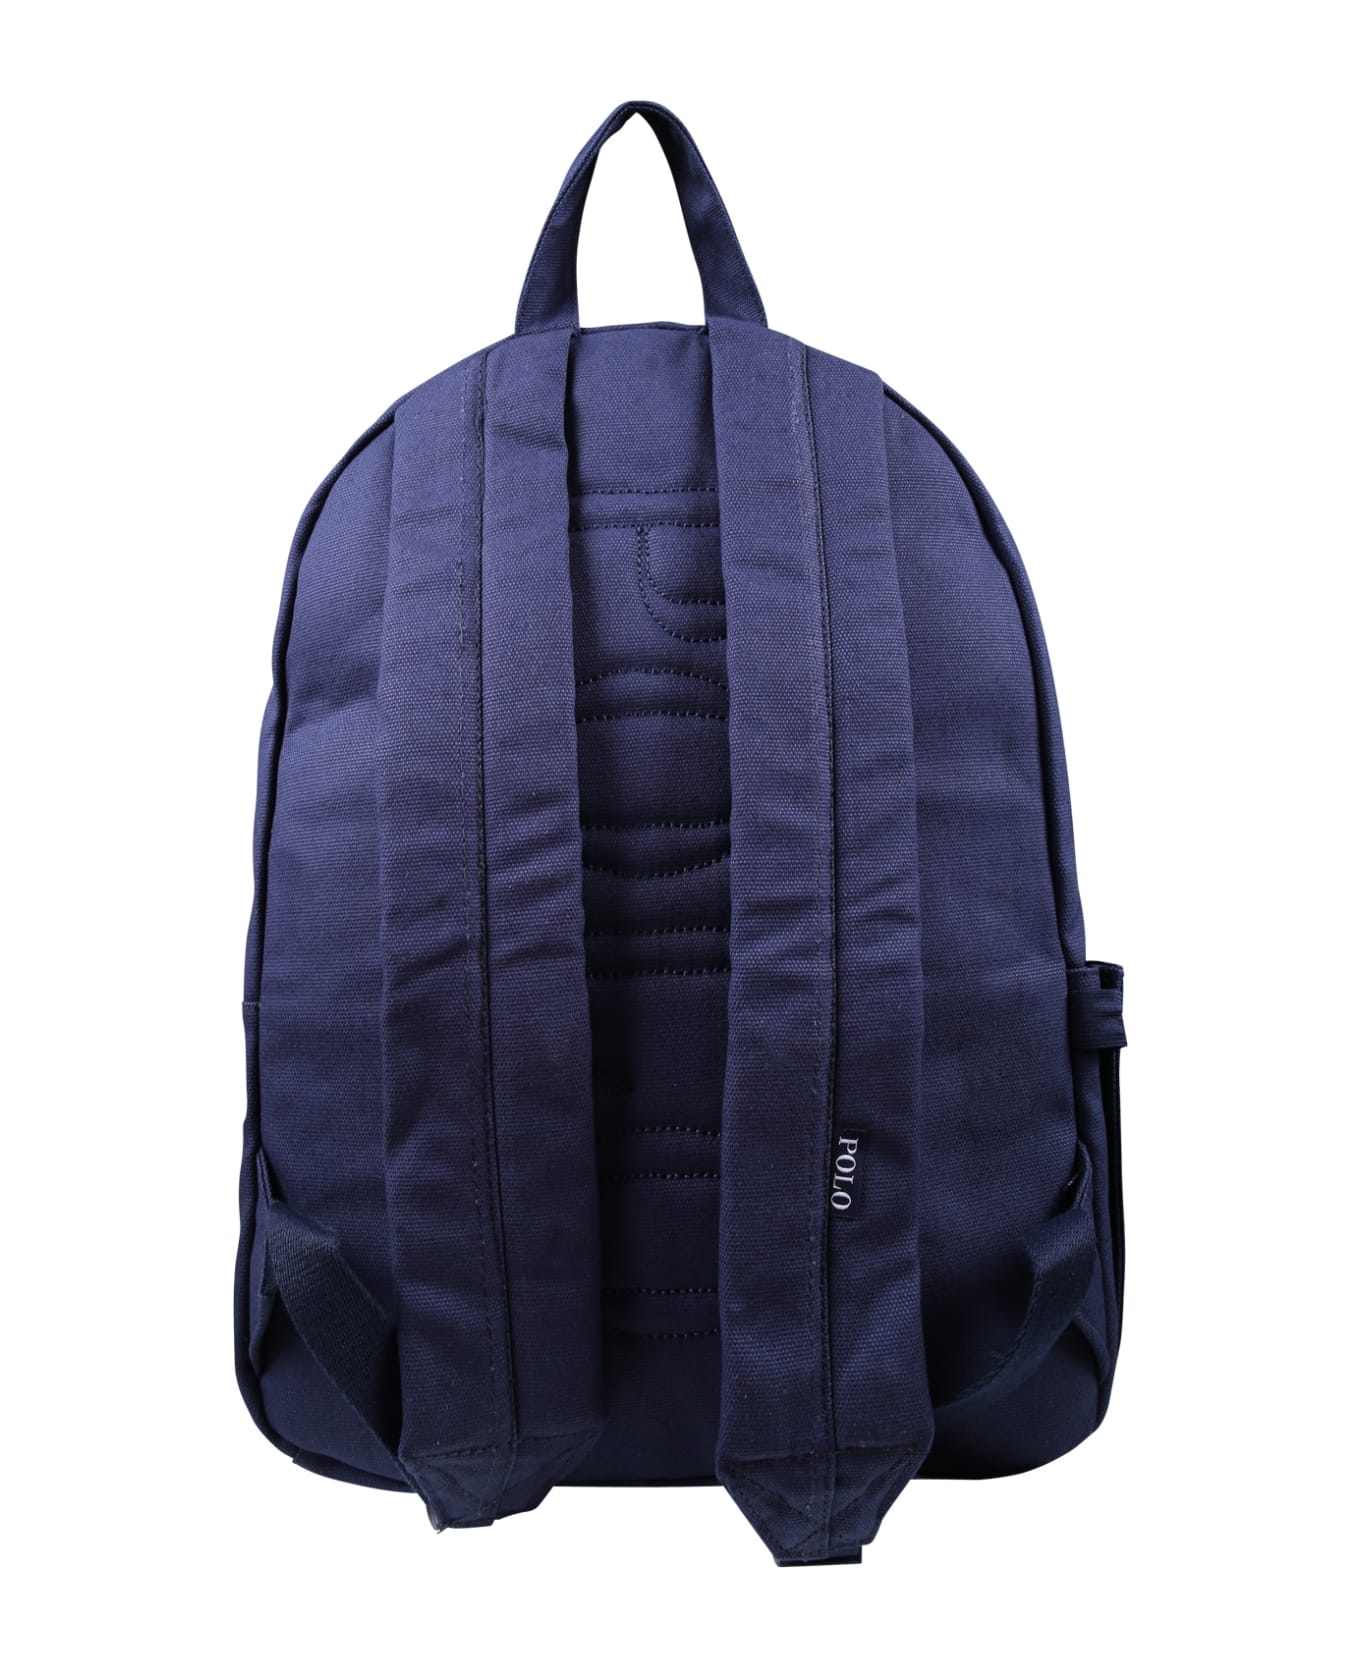 Ralph Lauren Blue Backpack For Kids With Logo - Blue